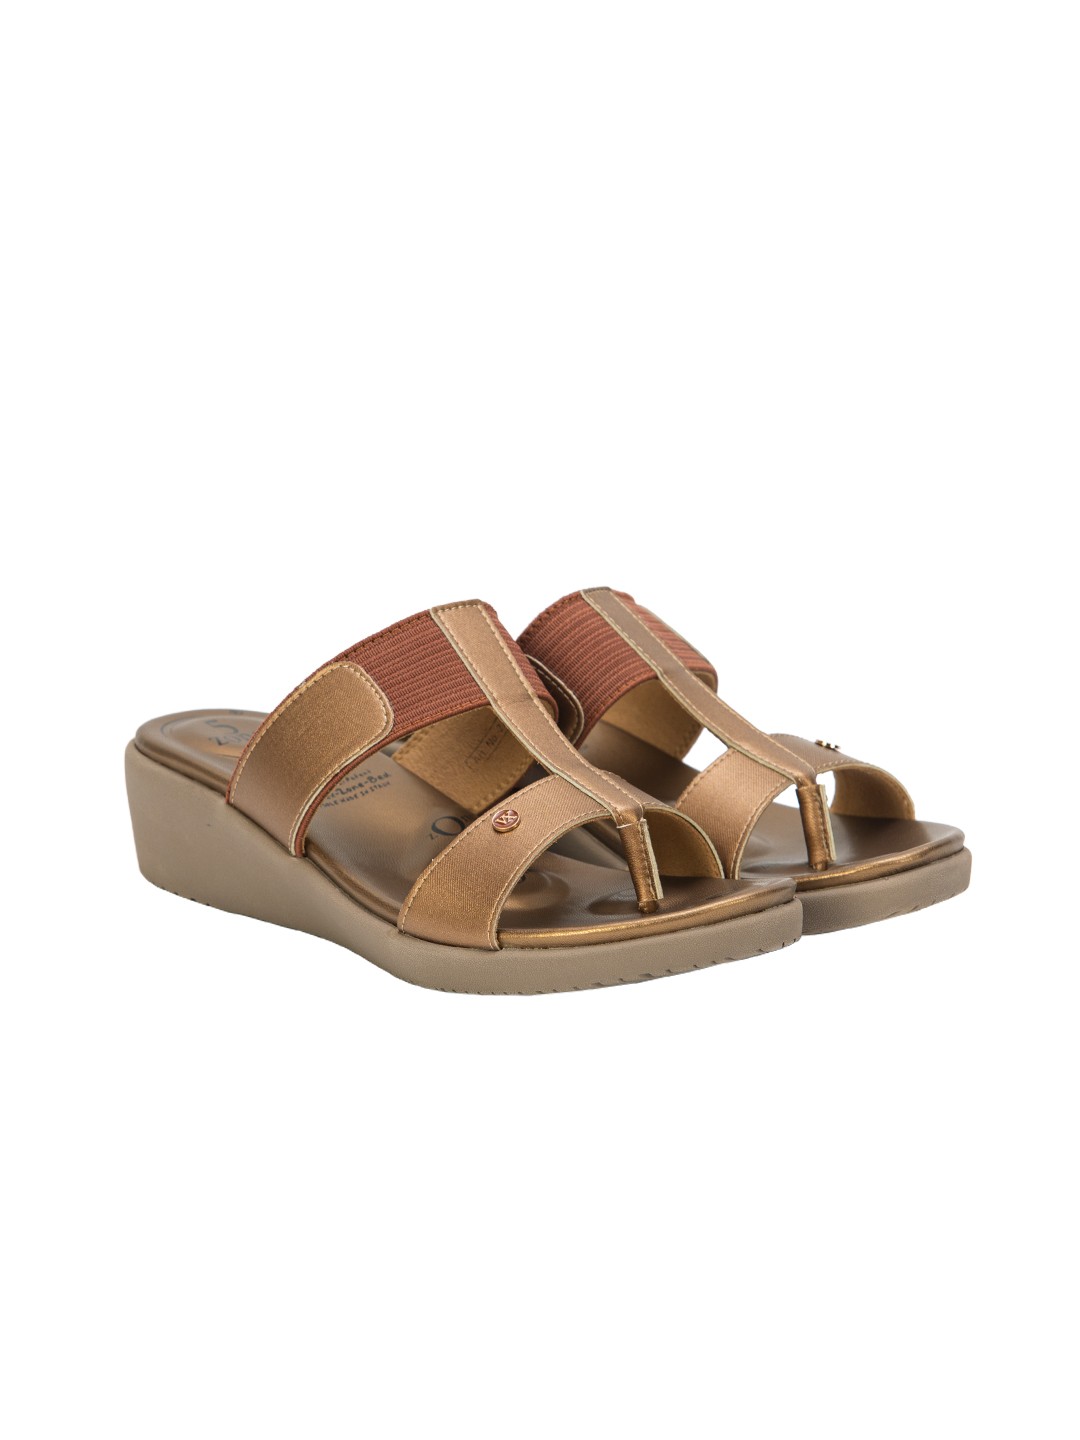 Buy Von Wellx Germany Comfort Glaze Browns  Slippers Online in Kandy